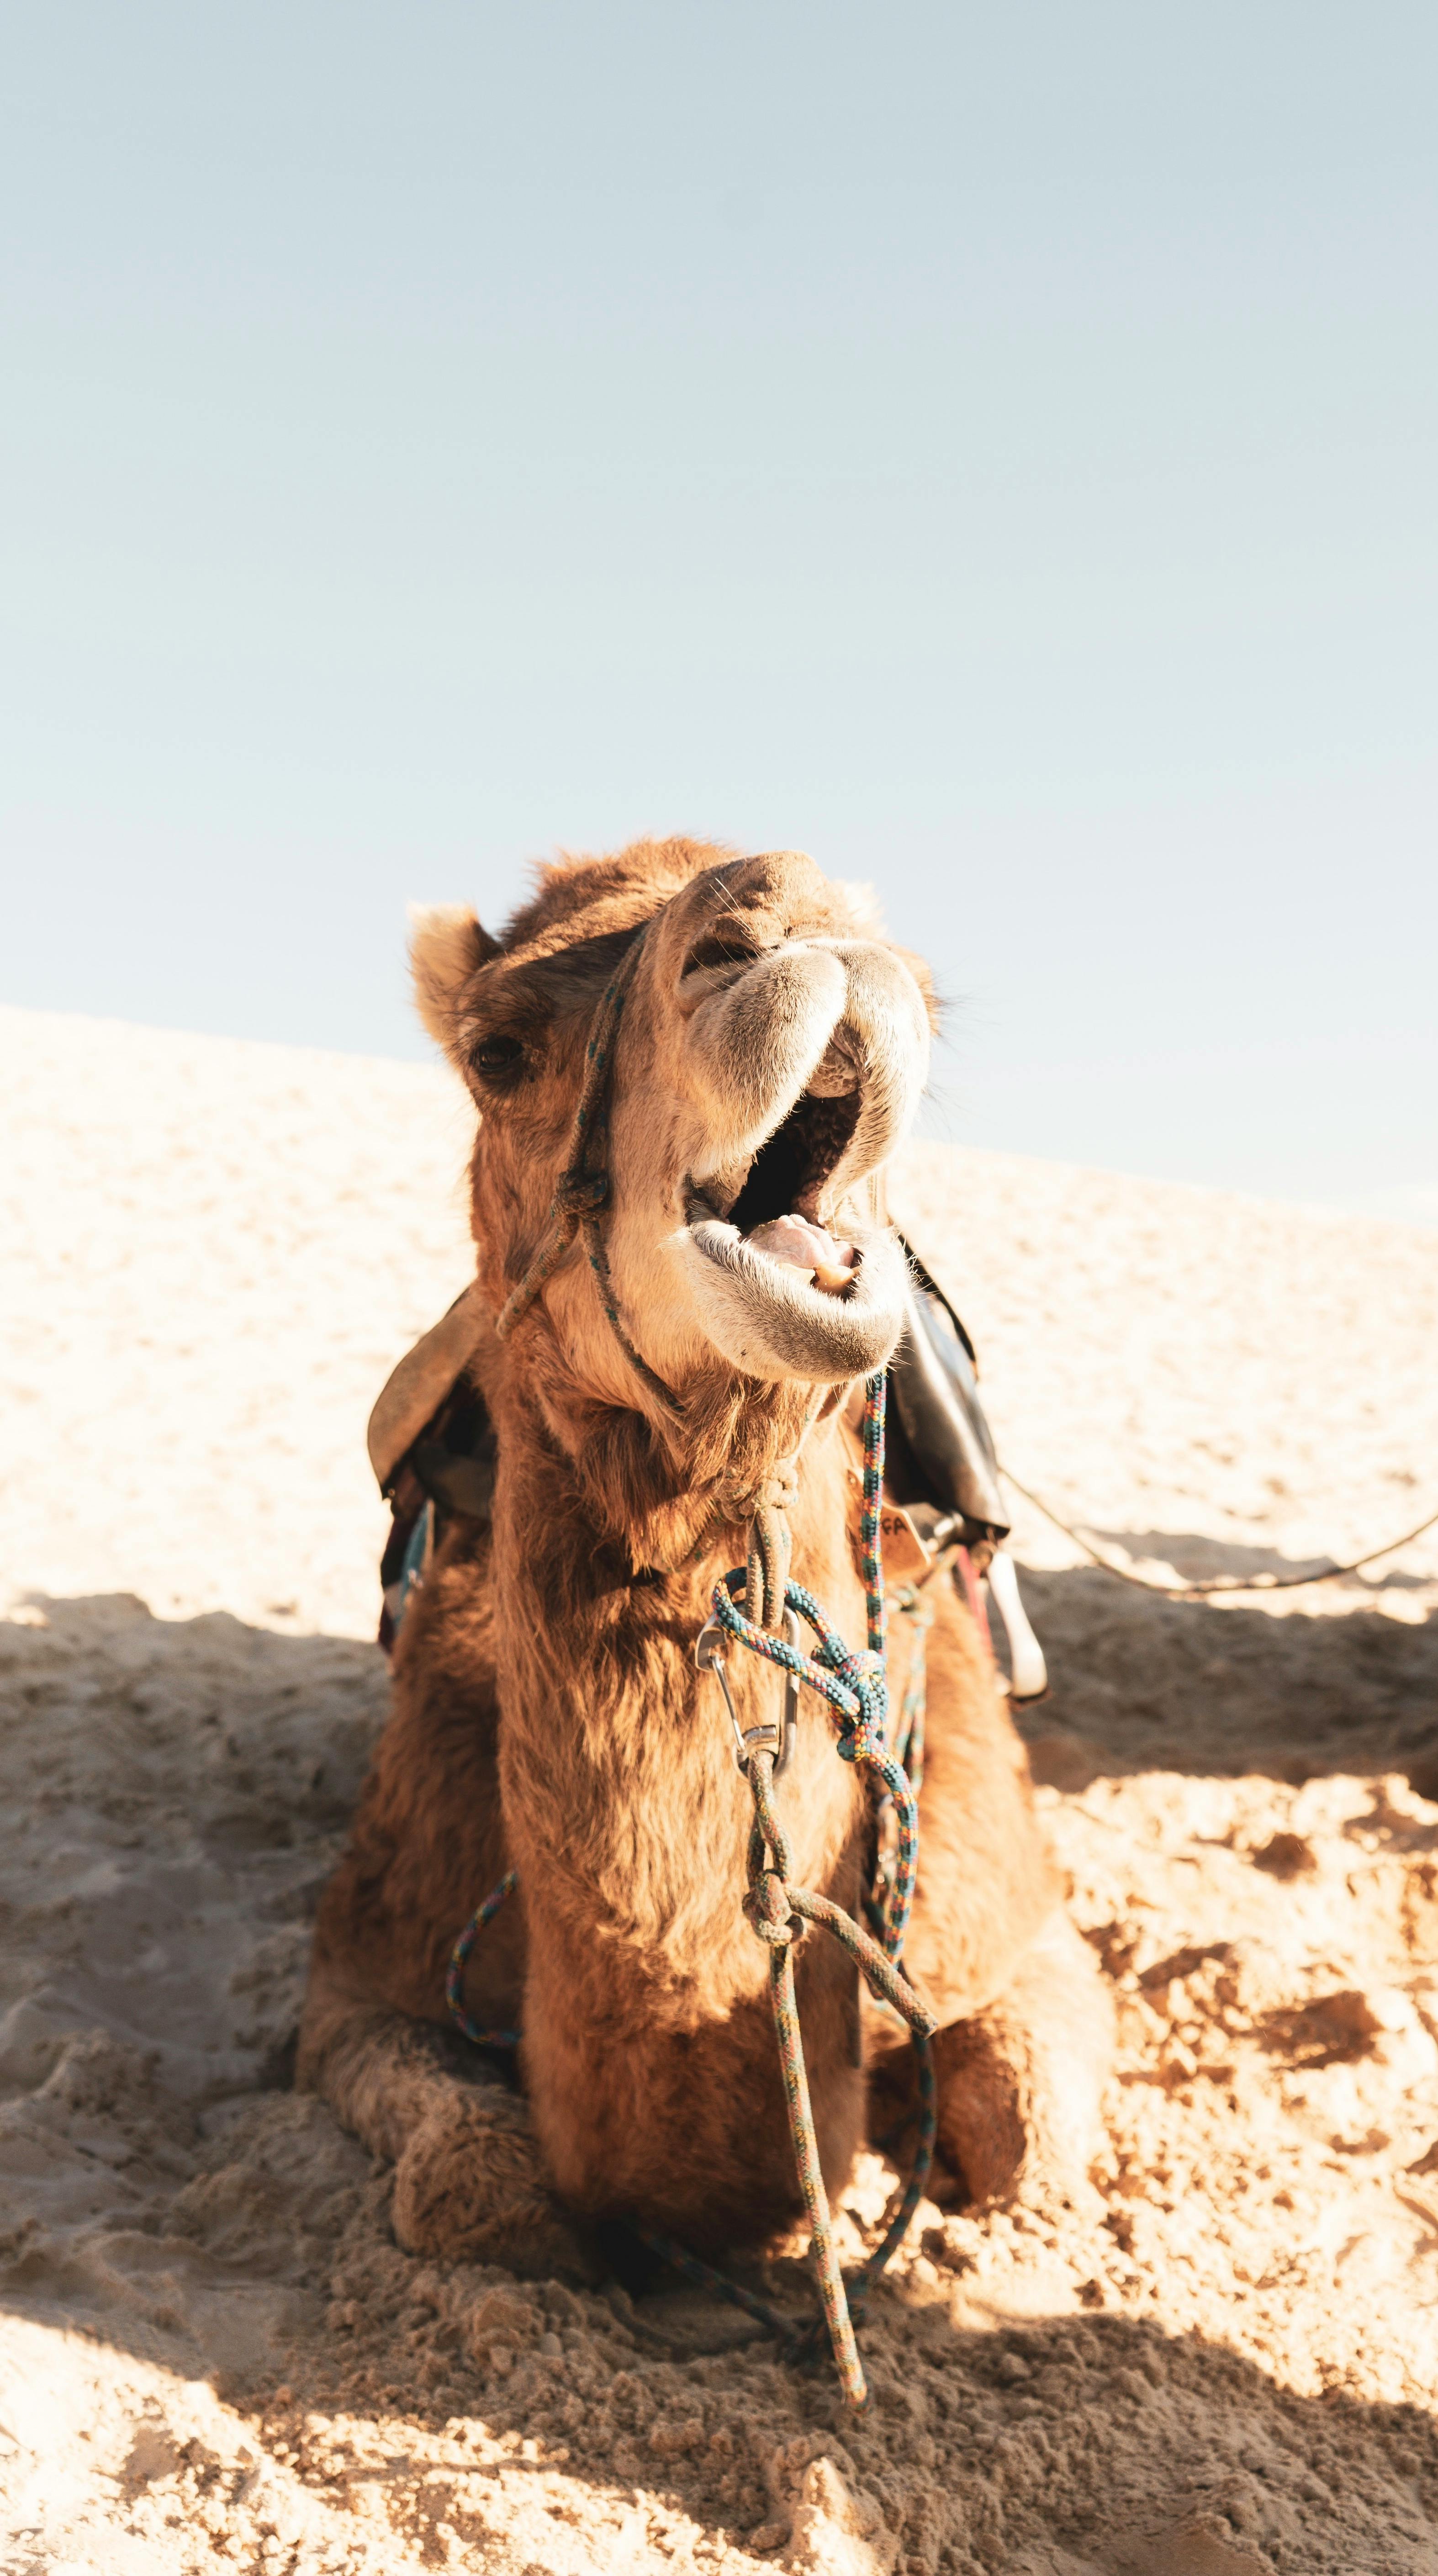 camel heat load software free download